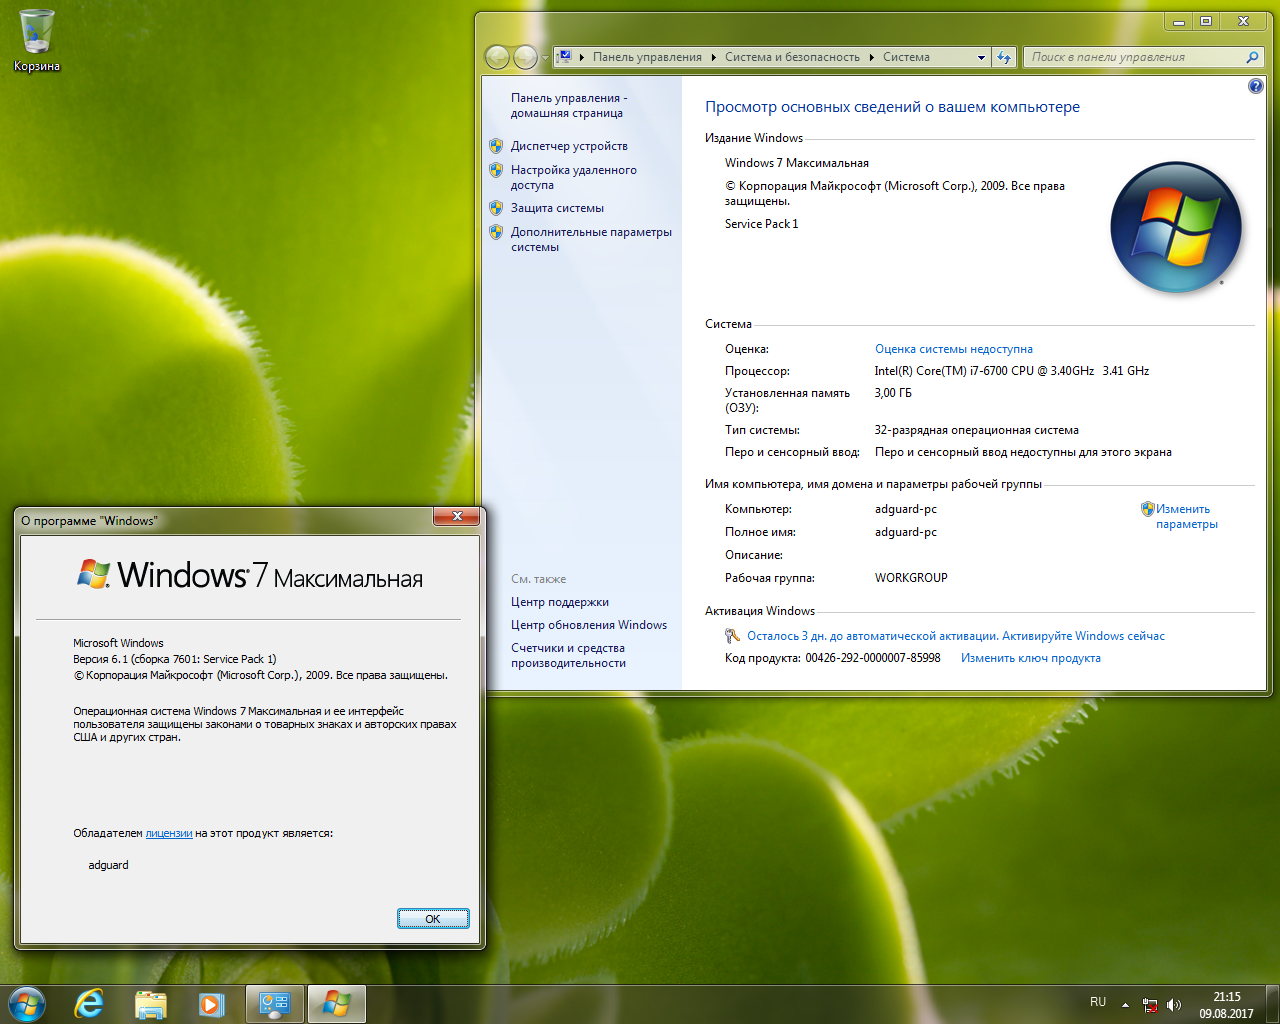 Активация виндовс сборка 7601. Windows 7 максимальная. Windows 7 sp1 with update [7601.26321]. Сборка Windows 7 sp1 with update 7601.23862 AIO 26in2 Adguard (x86/x64).